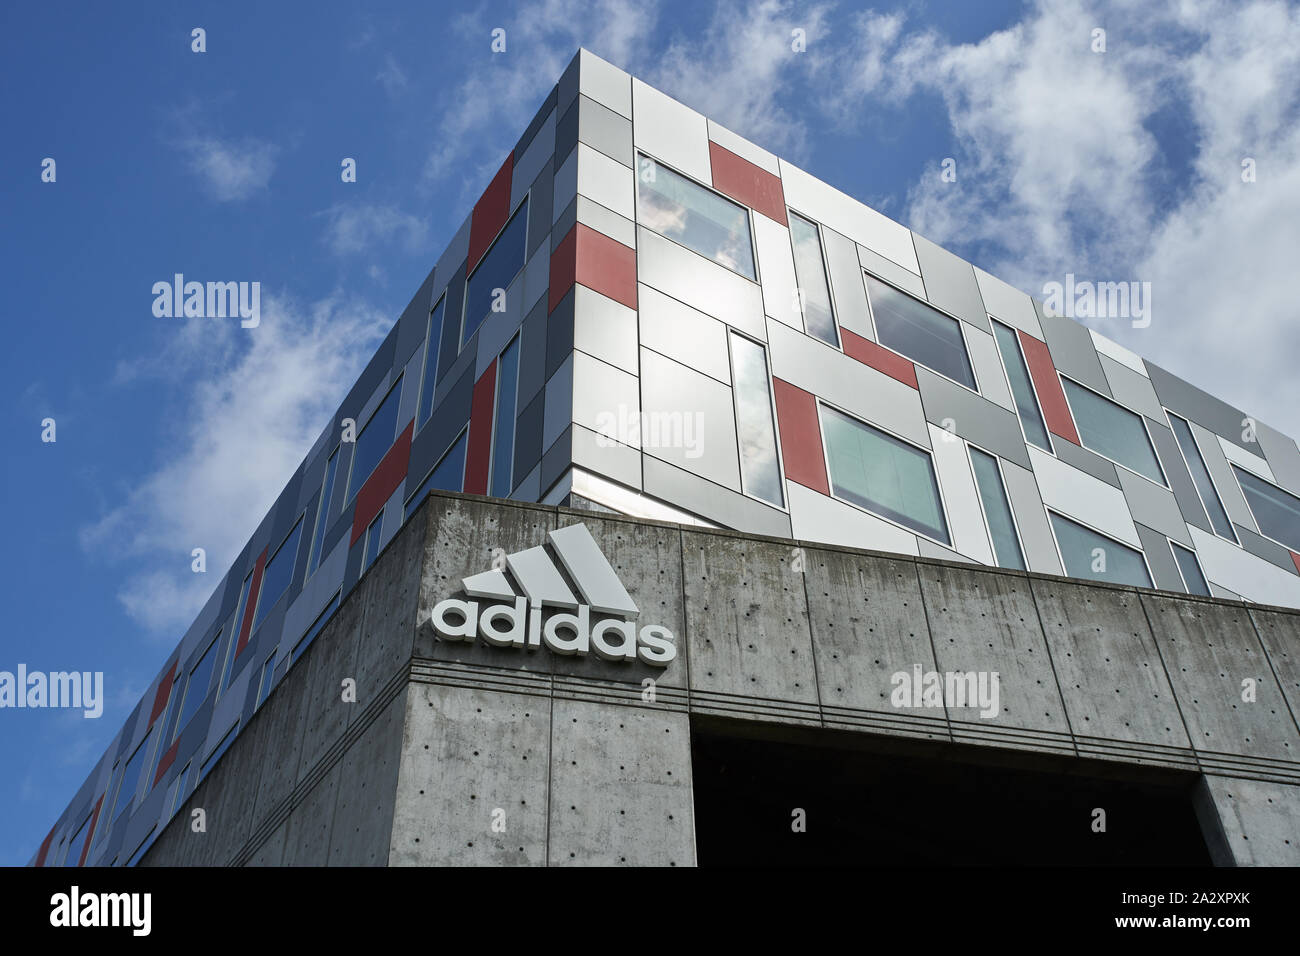 amusement Schaduw Persoonlijk Adidas logo on shoe hi-res stock photography and images - Alamy